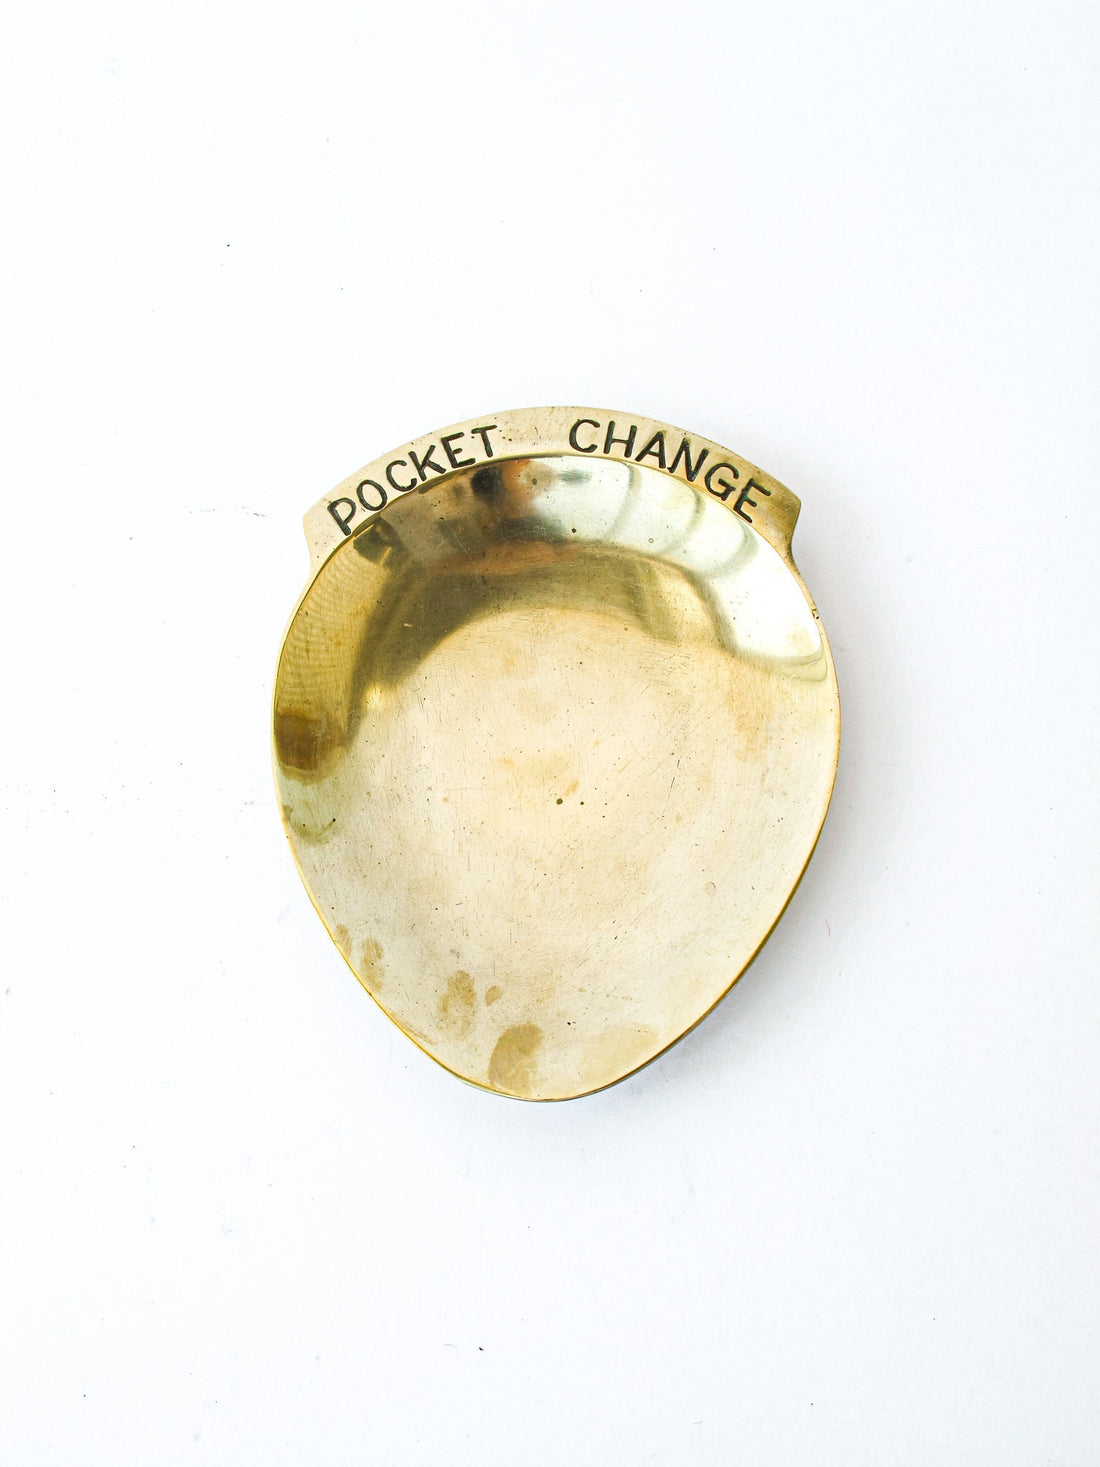 Brass Pocket Change Dish Tray